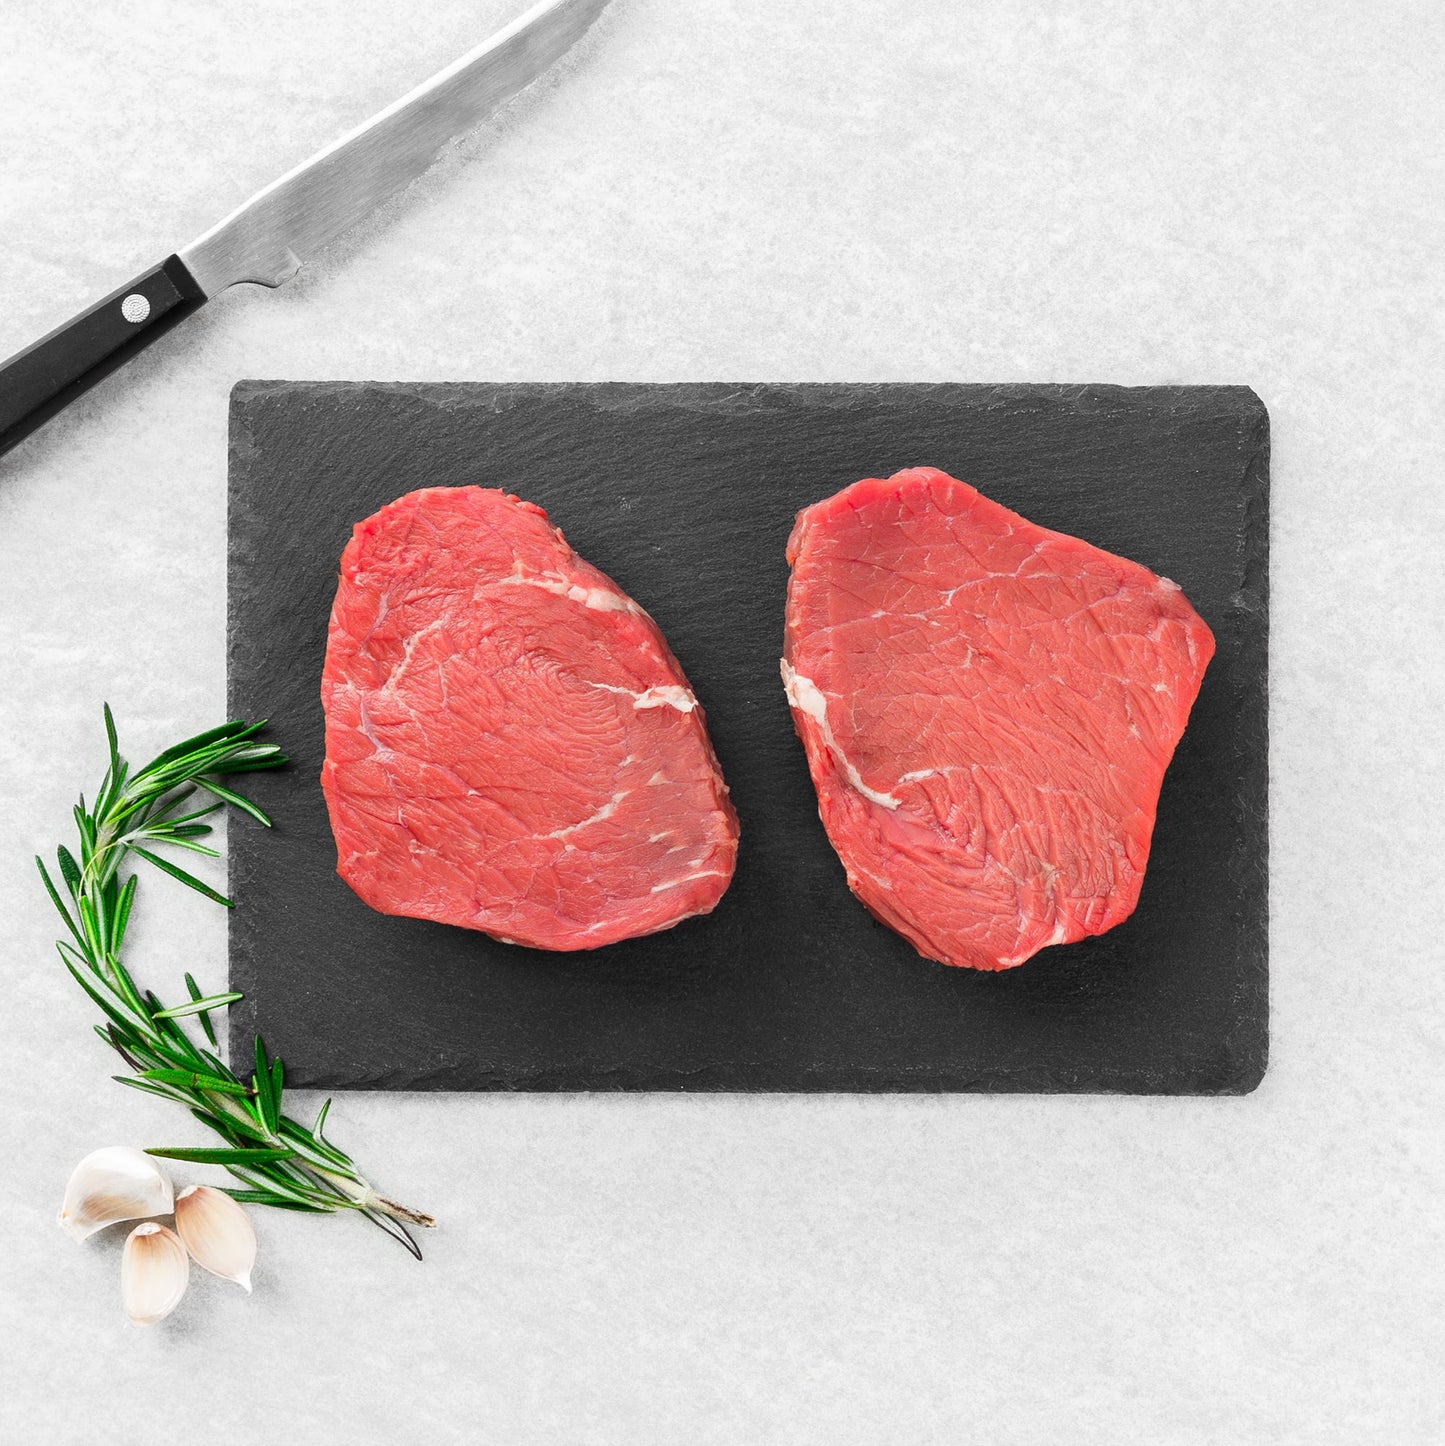 USDA Choice Sirloin Steak - (4) 6oz. steaks